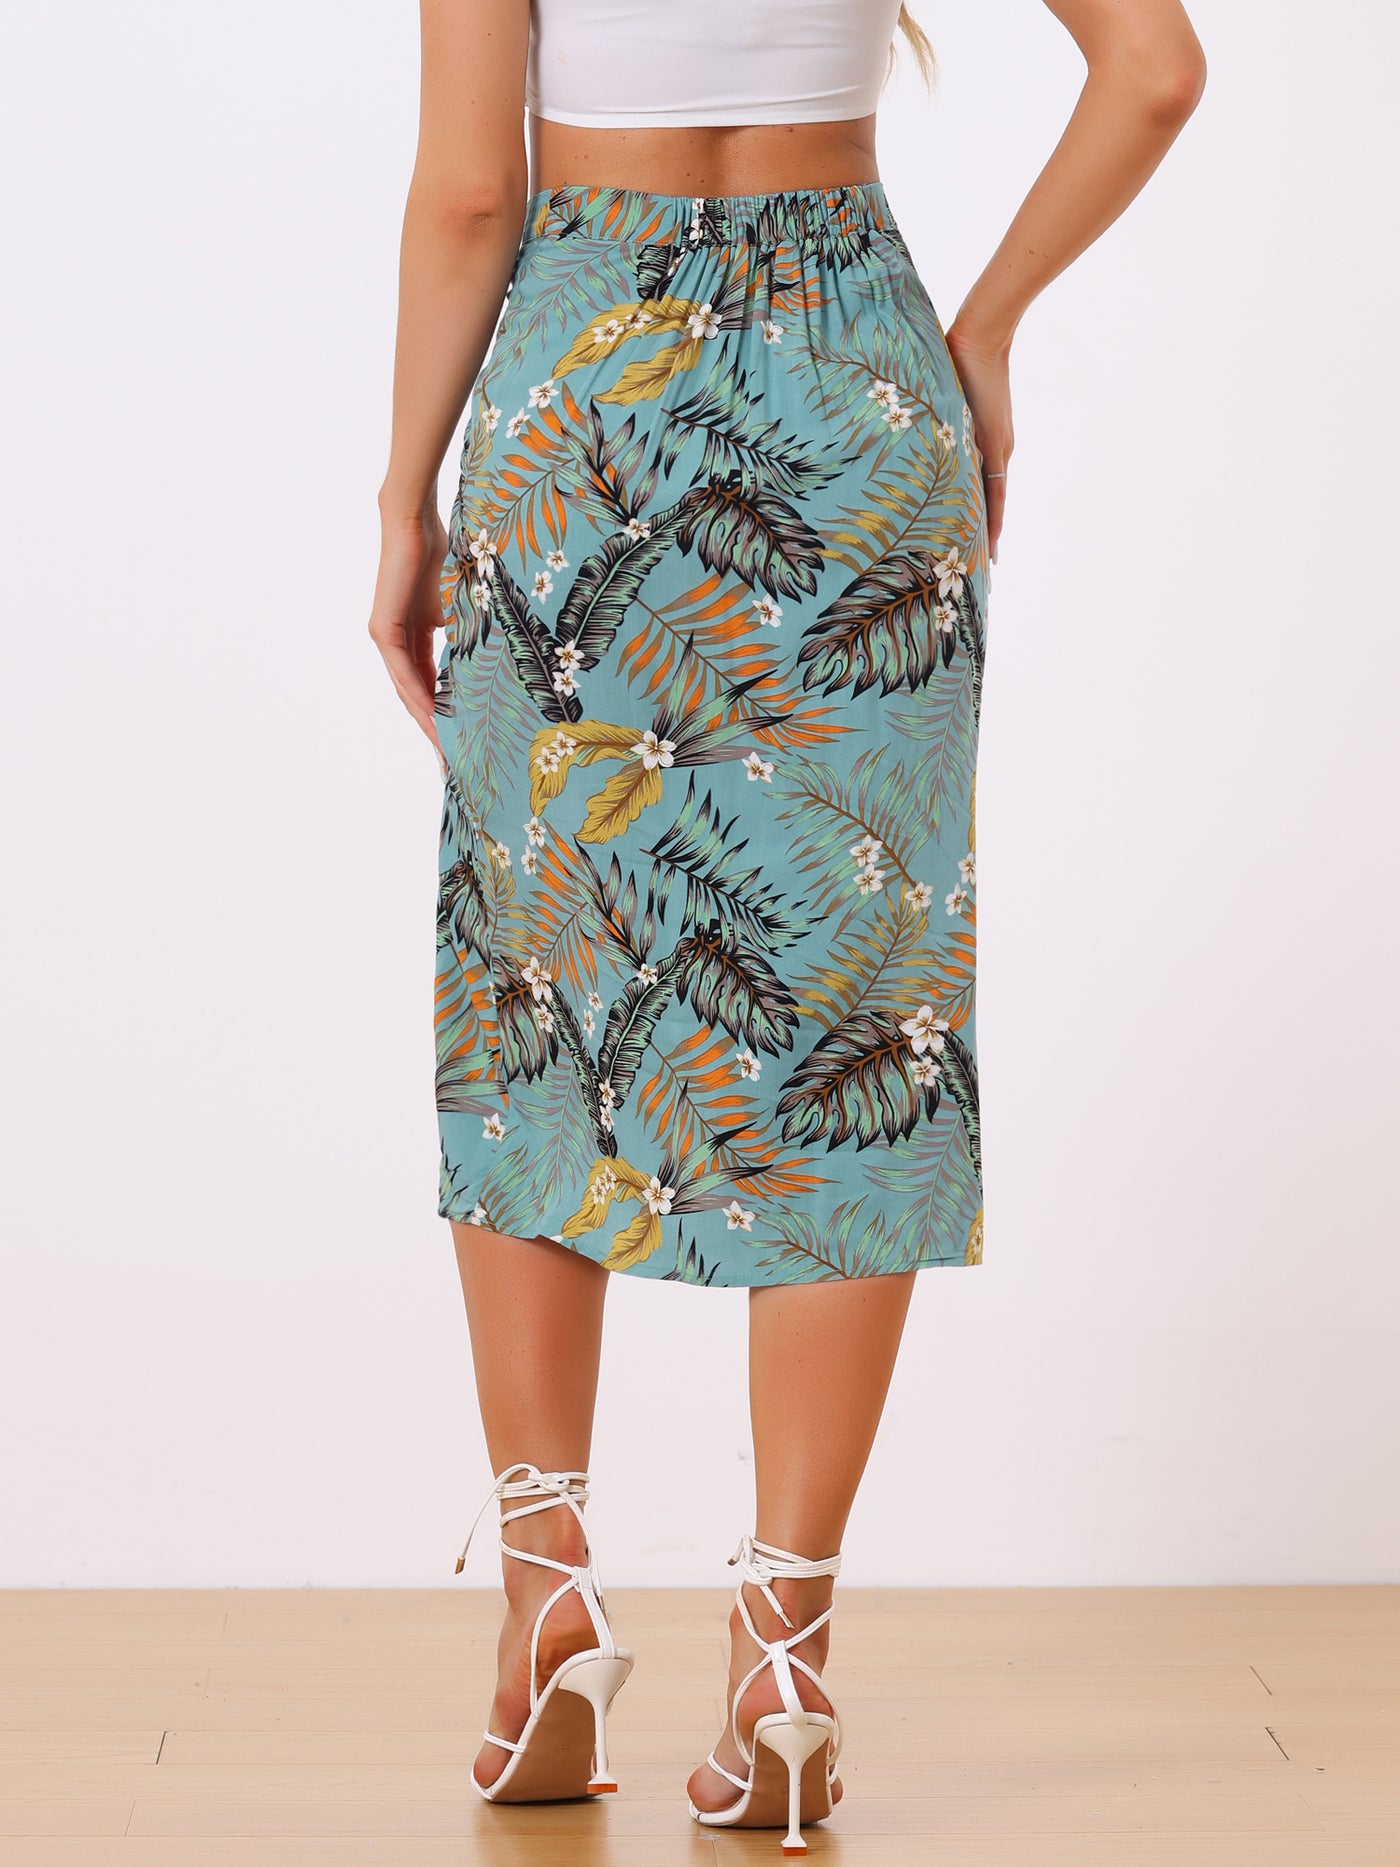 Allegra K Women's Hawaiian Skirts Beach Ruched Front Tropical Skirt with Slit